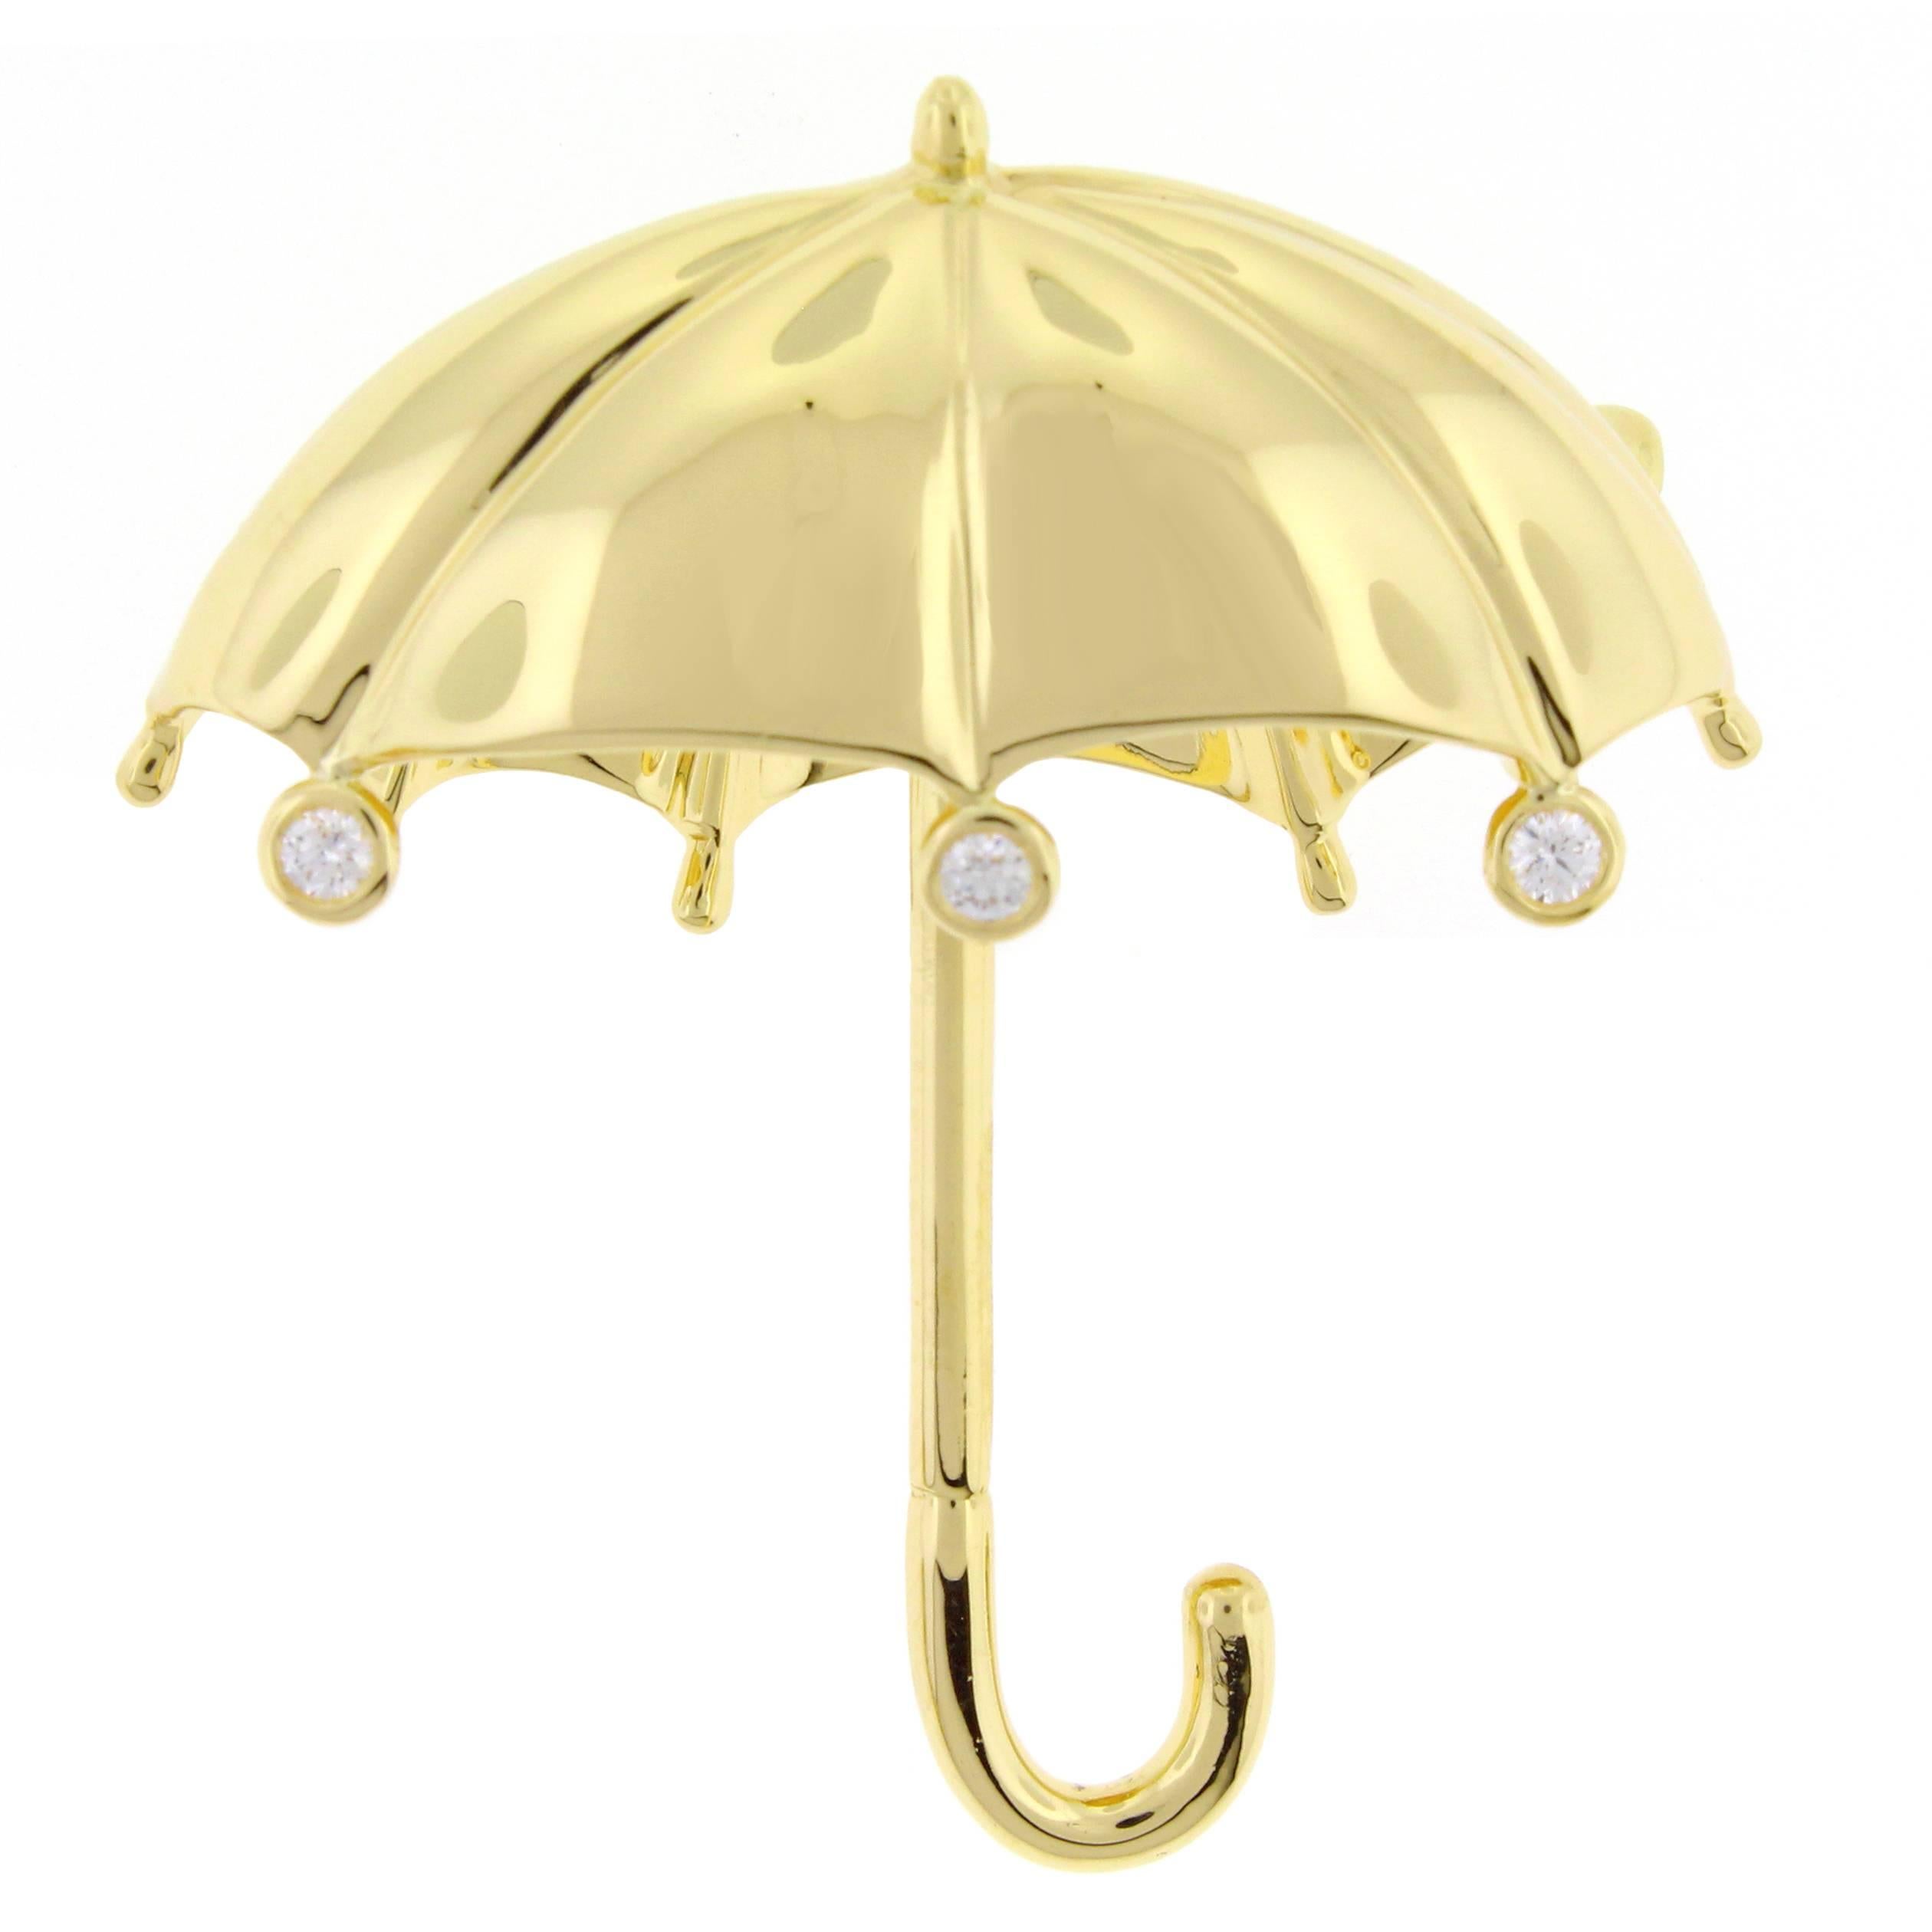   Tiffany & Co. Large Diamond Gold Umbrella Brooch 